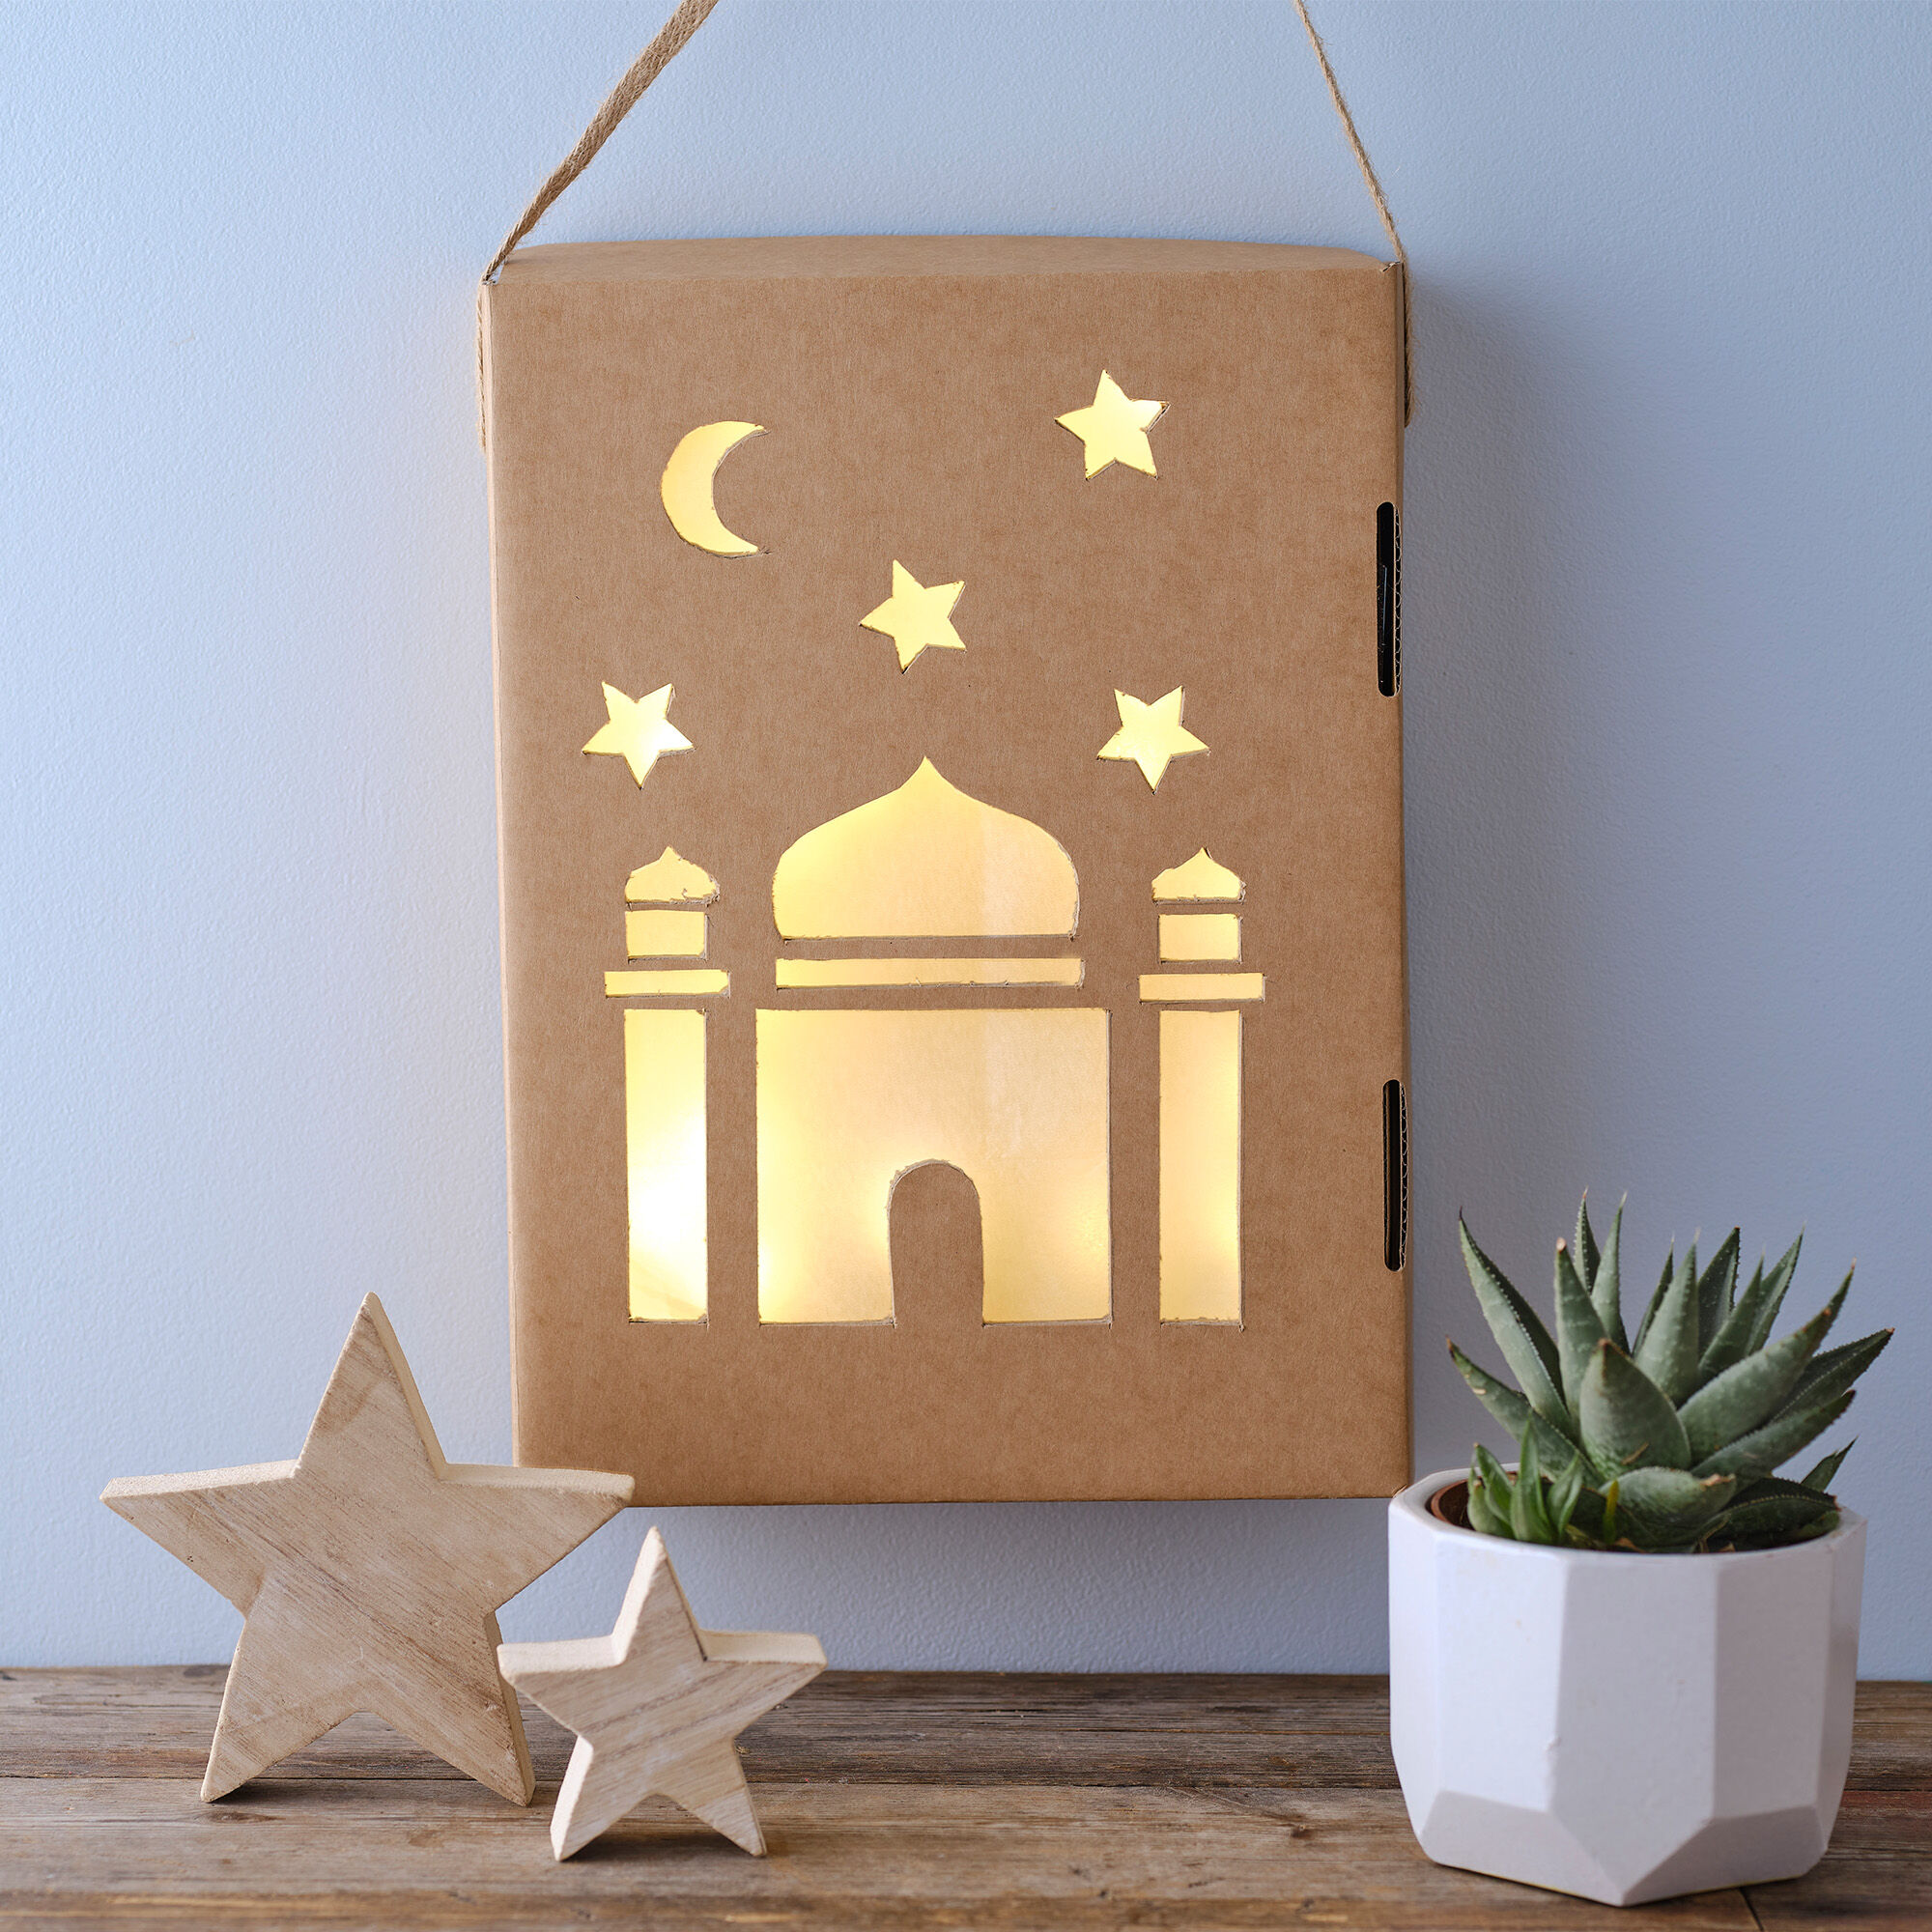 Easy DIY Ramadan Decor ideas - lantern and moon - Craftionary